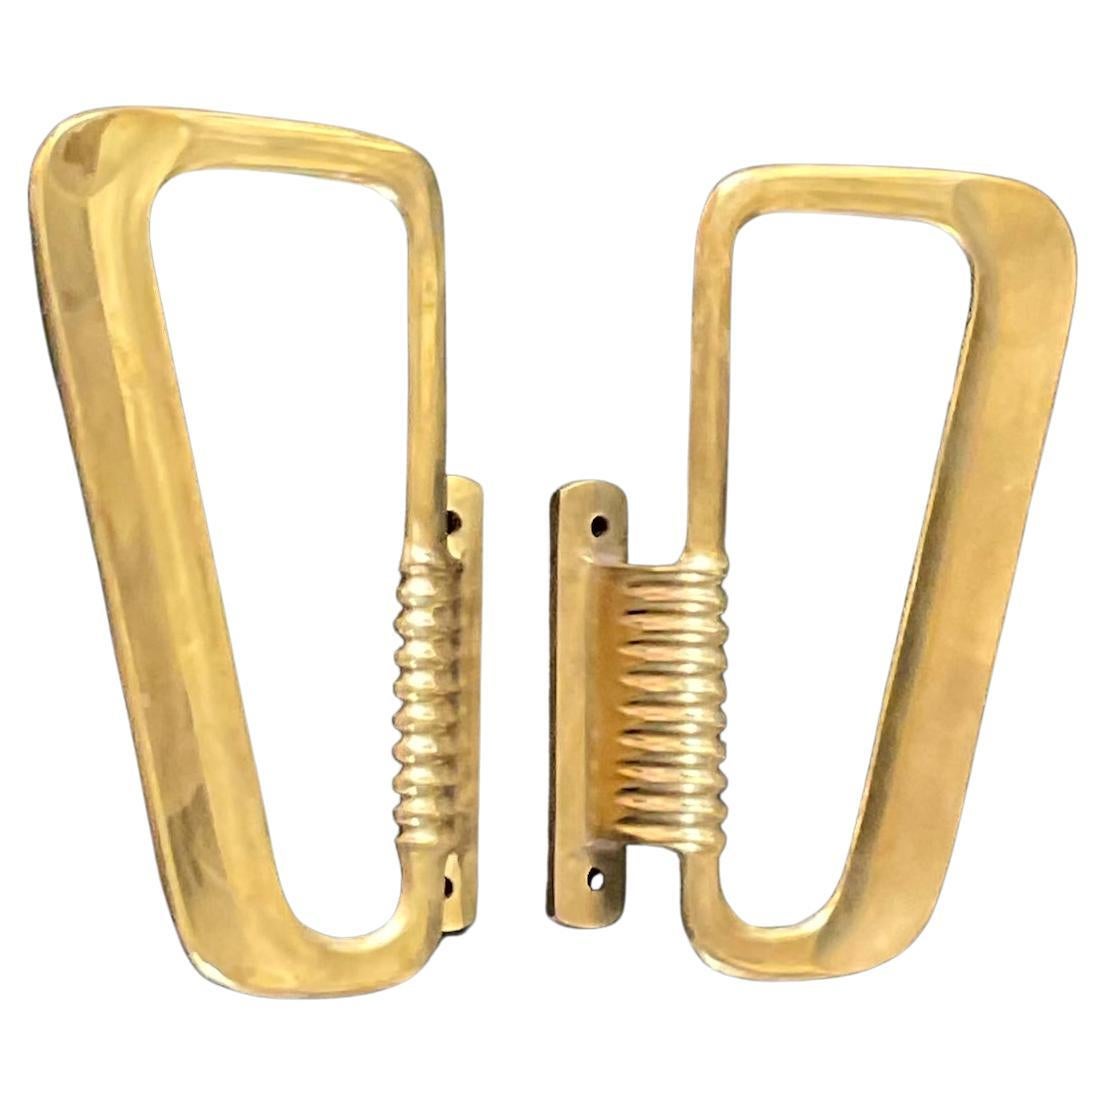 Pair of Large Midcentury Brass Door Handles, Italy [I]